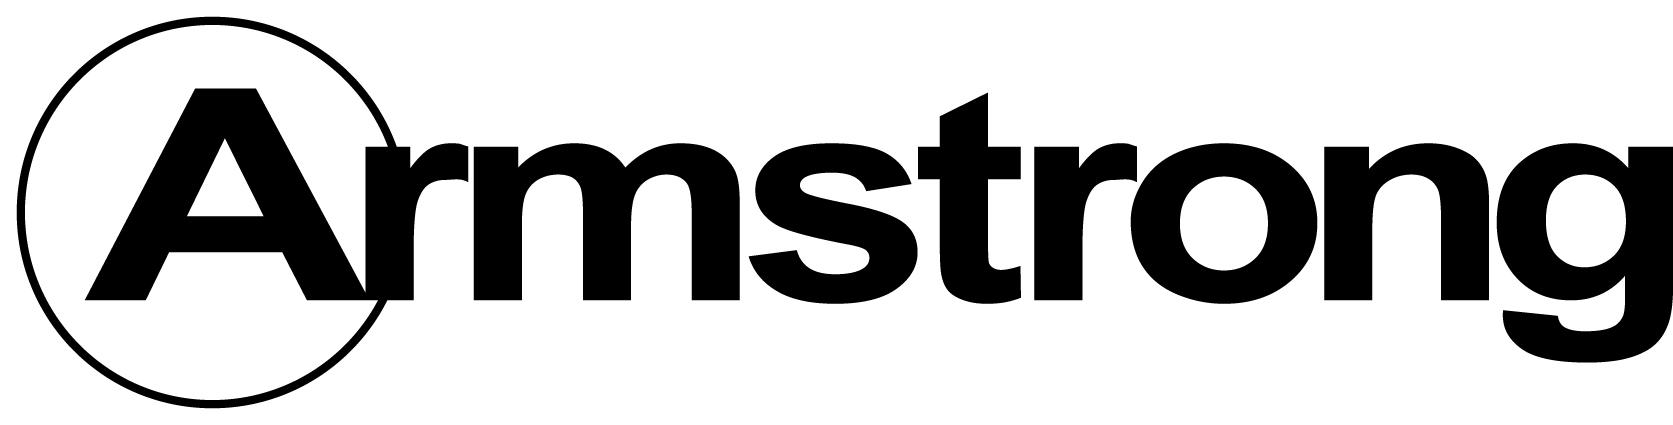 Armstrong Logo - Armstrong World Industries logo